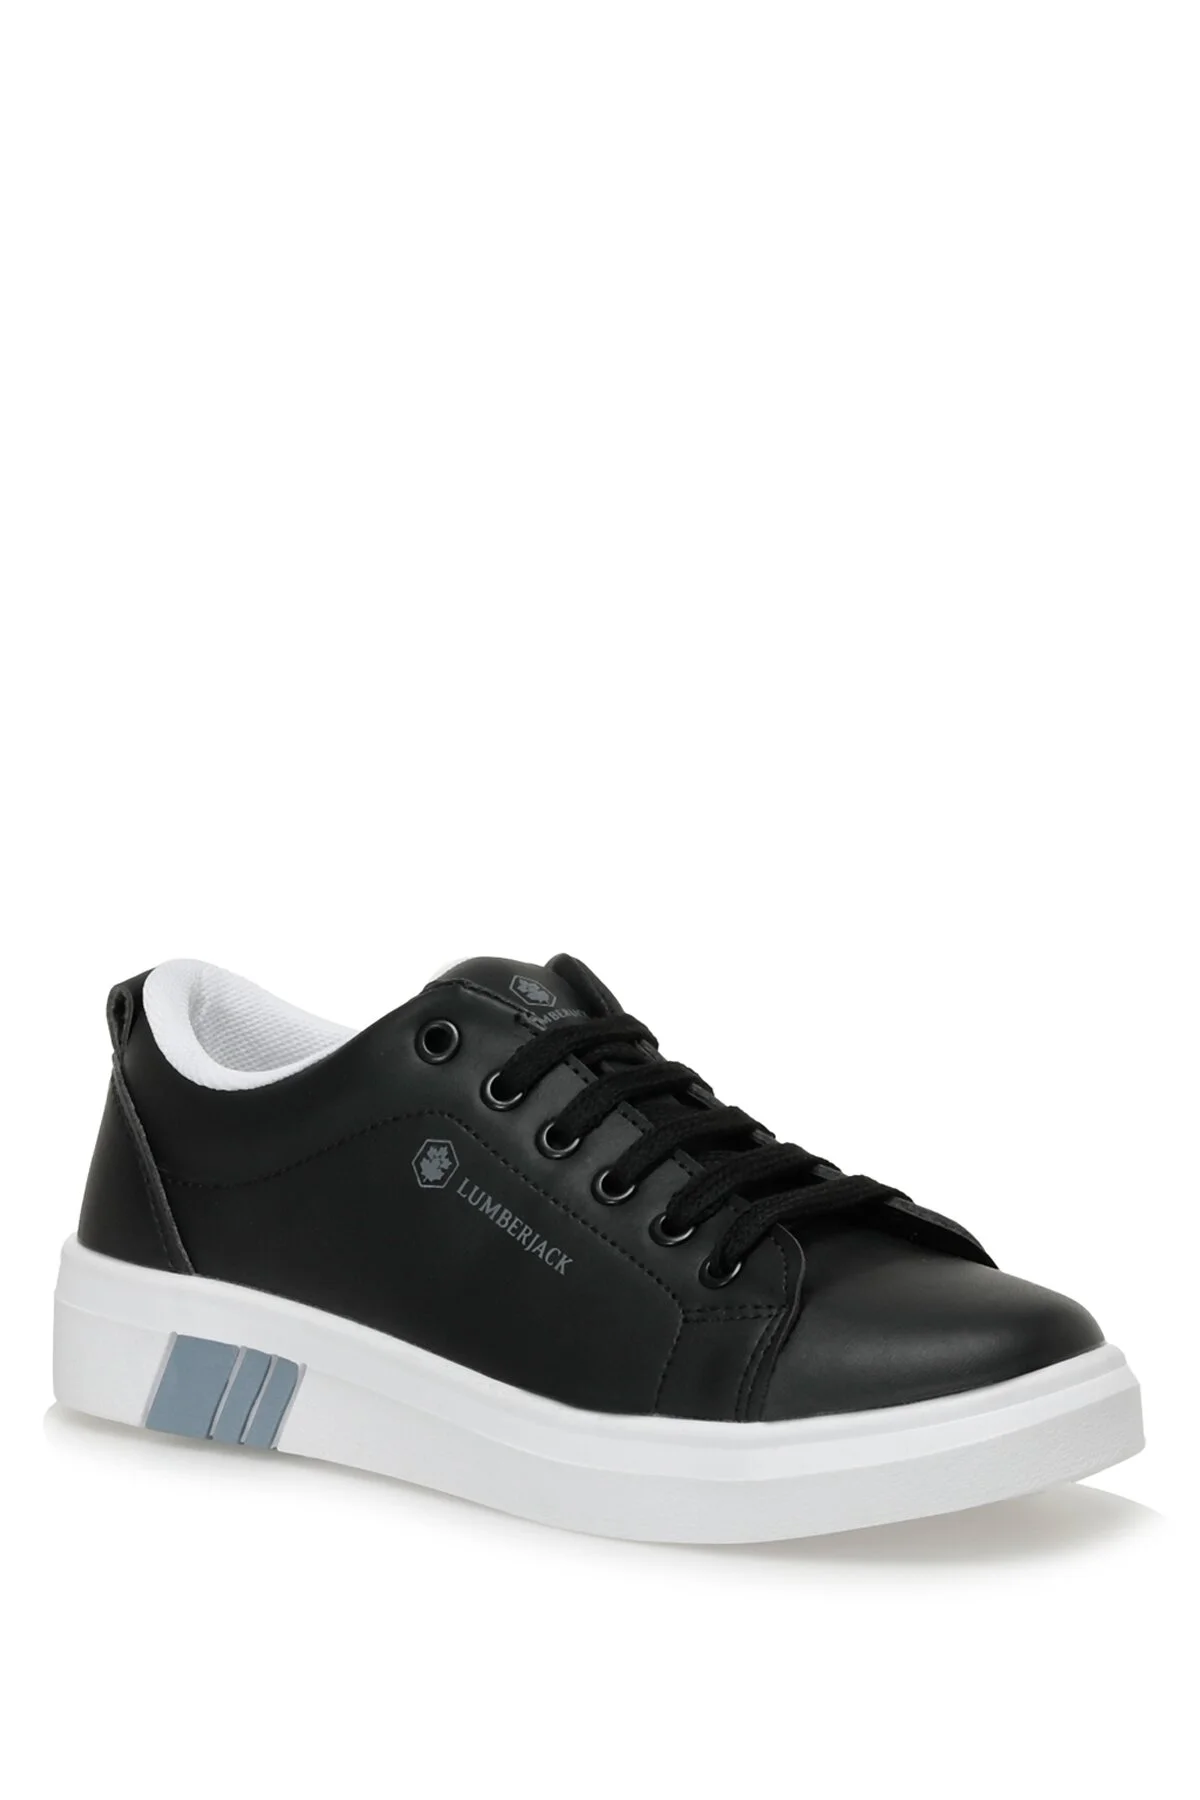 TINA 3FX Kadın Sneaker Spor Ayakkabı-Siyah